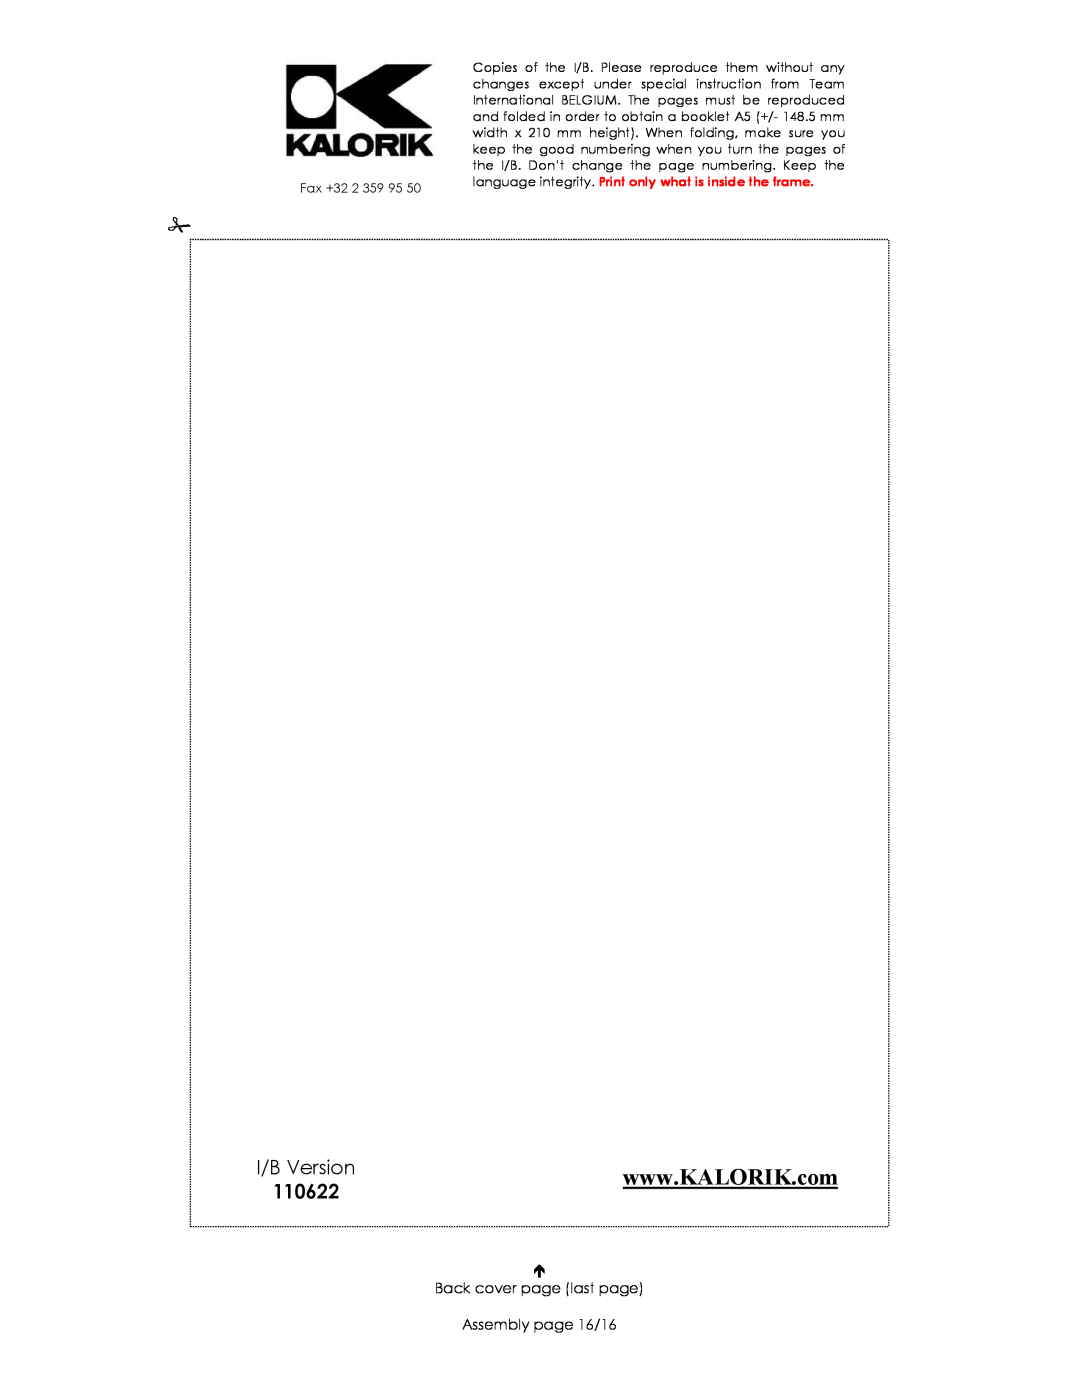 Kalorik USK MCL 36711 manual I/B Version, 110622, Back cover page last page Assembly page 16/16 